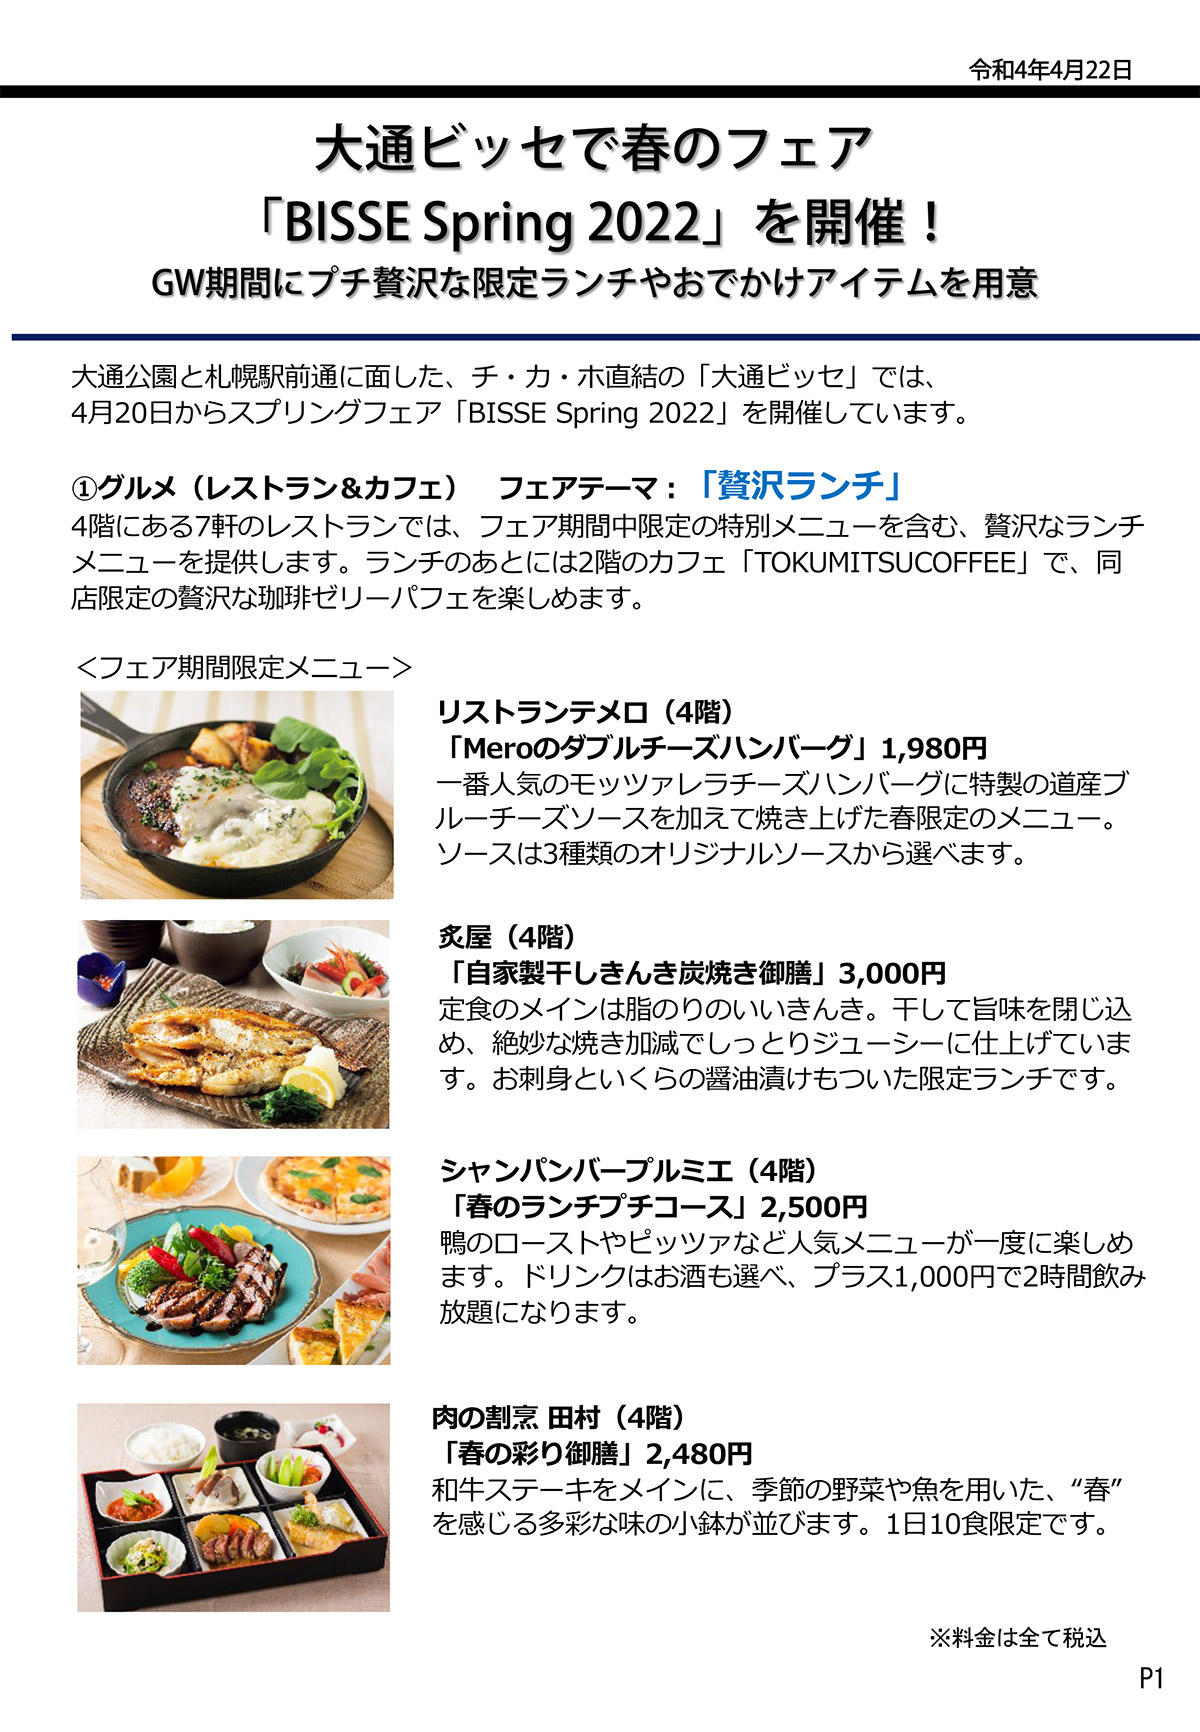 https://www.odori-bisse.com/info/news_220428_img1.jpg